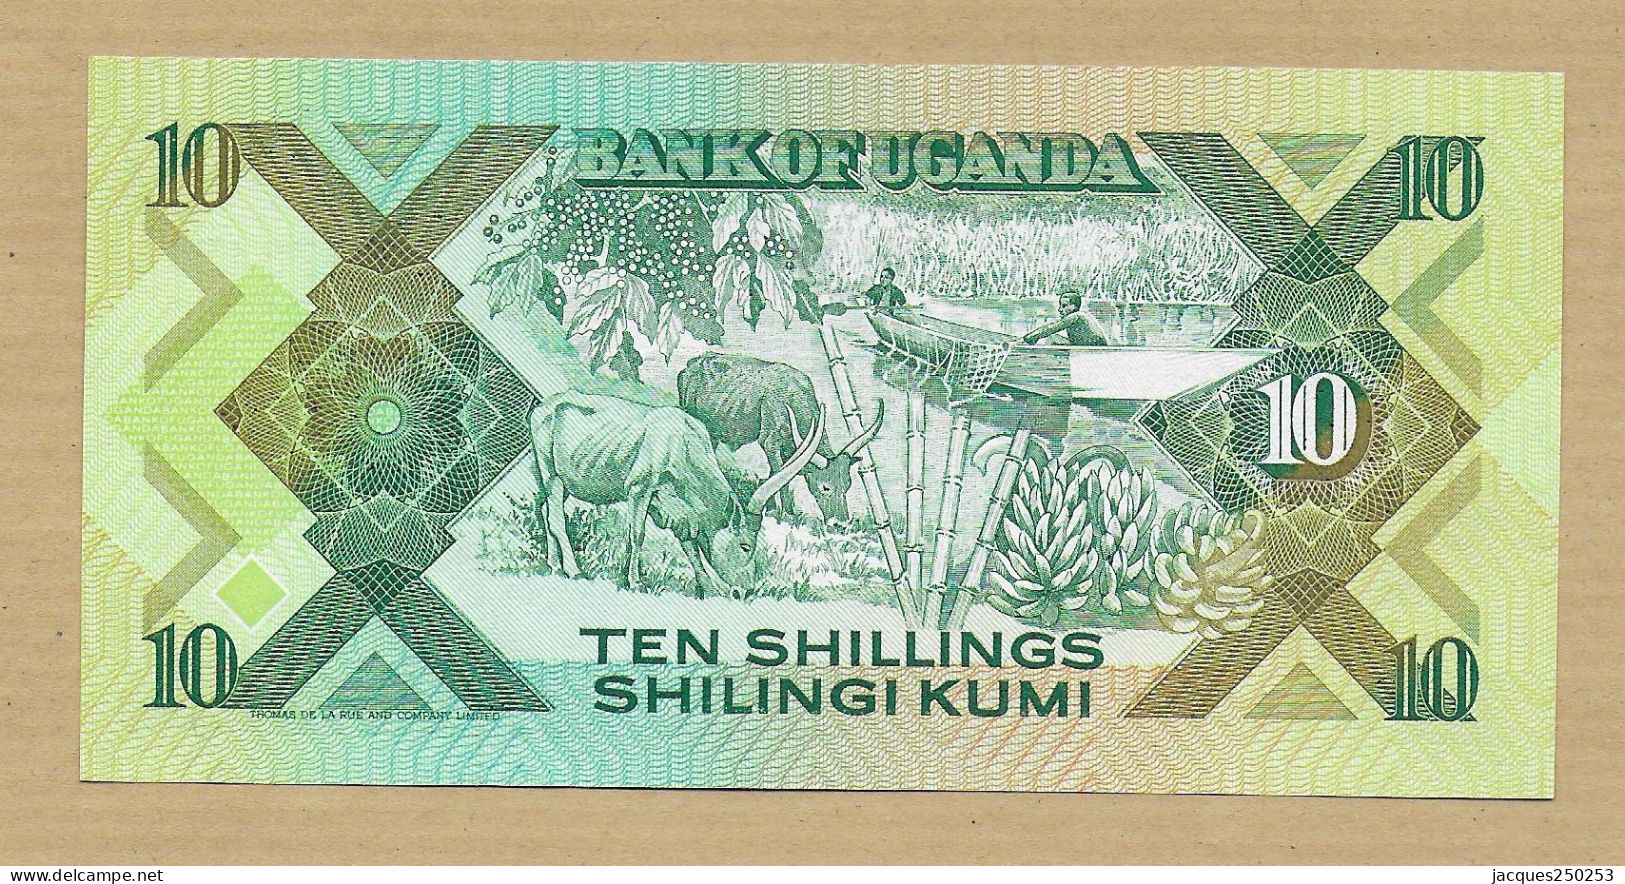 10 SHILLINGS 1987 NEUF - Uganda